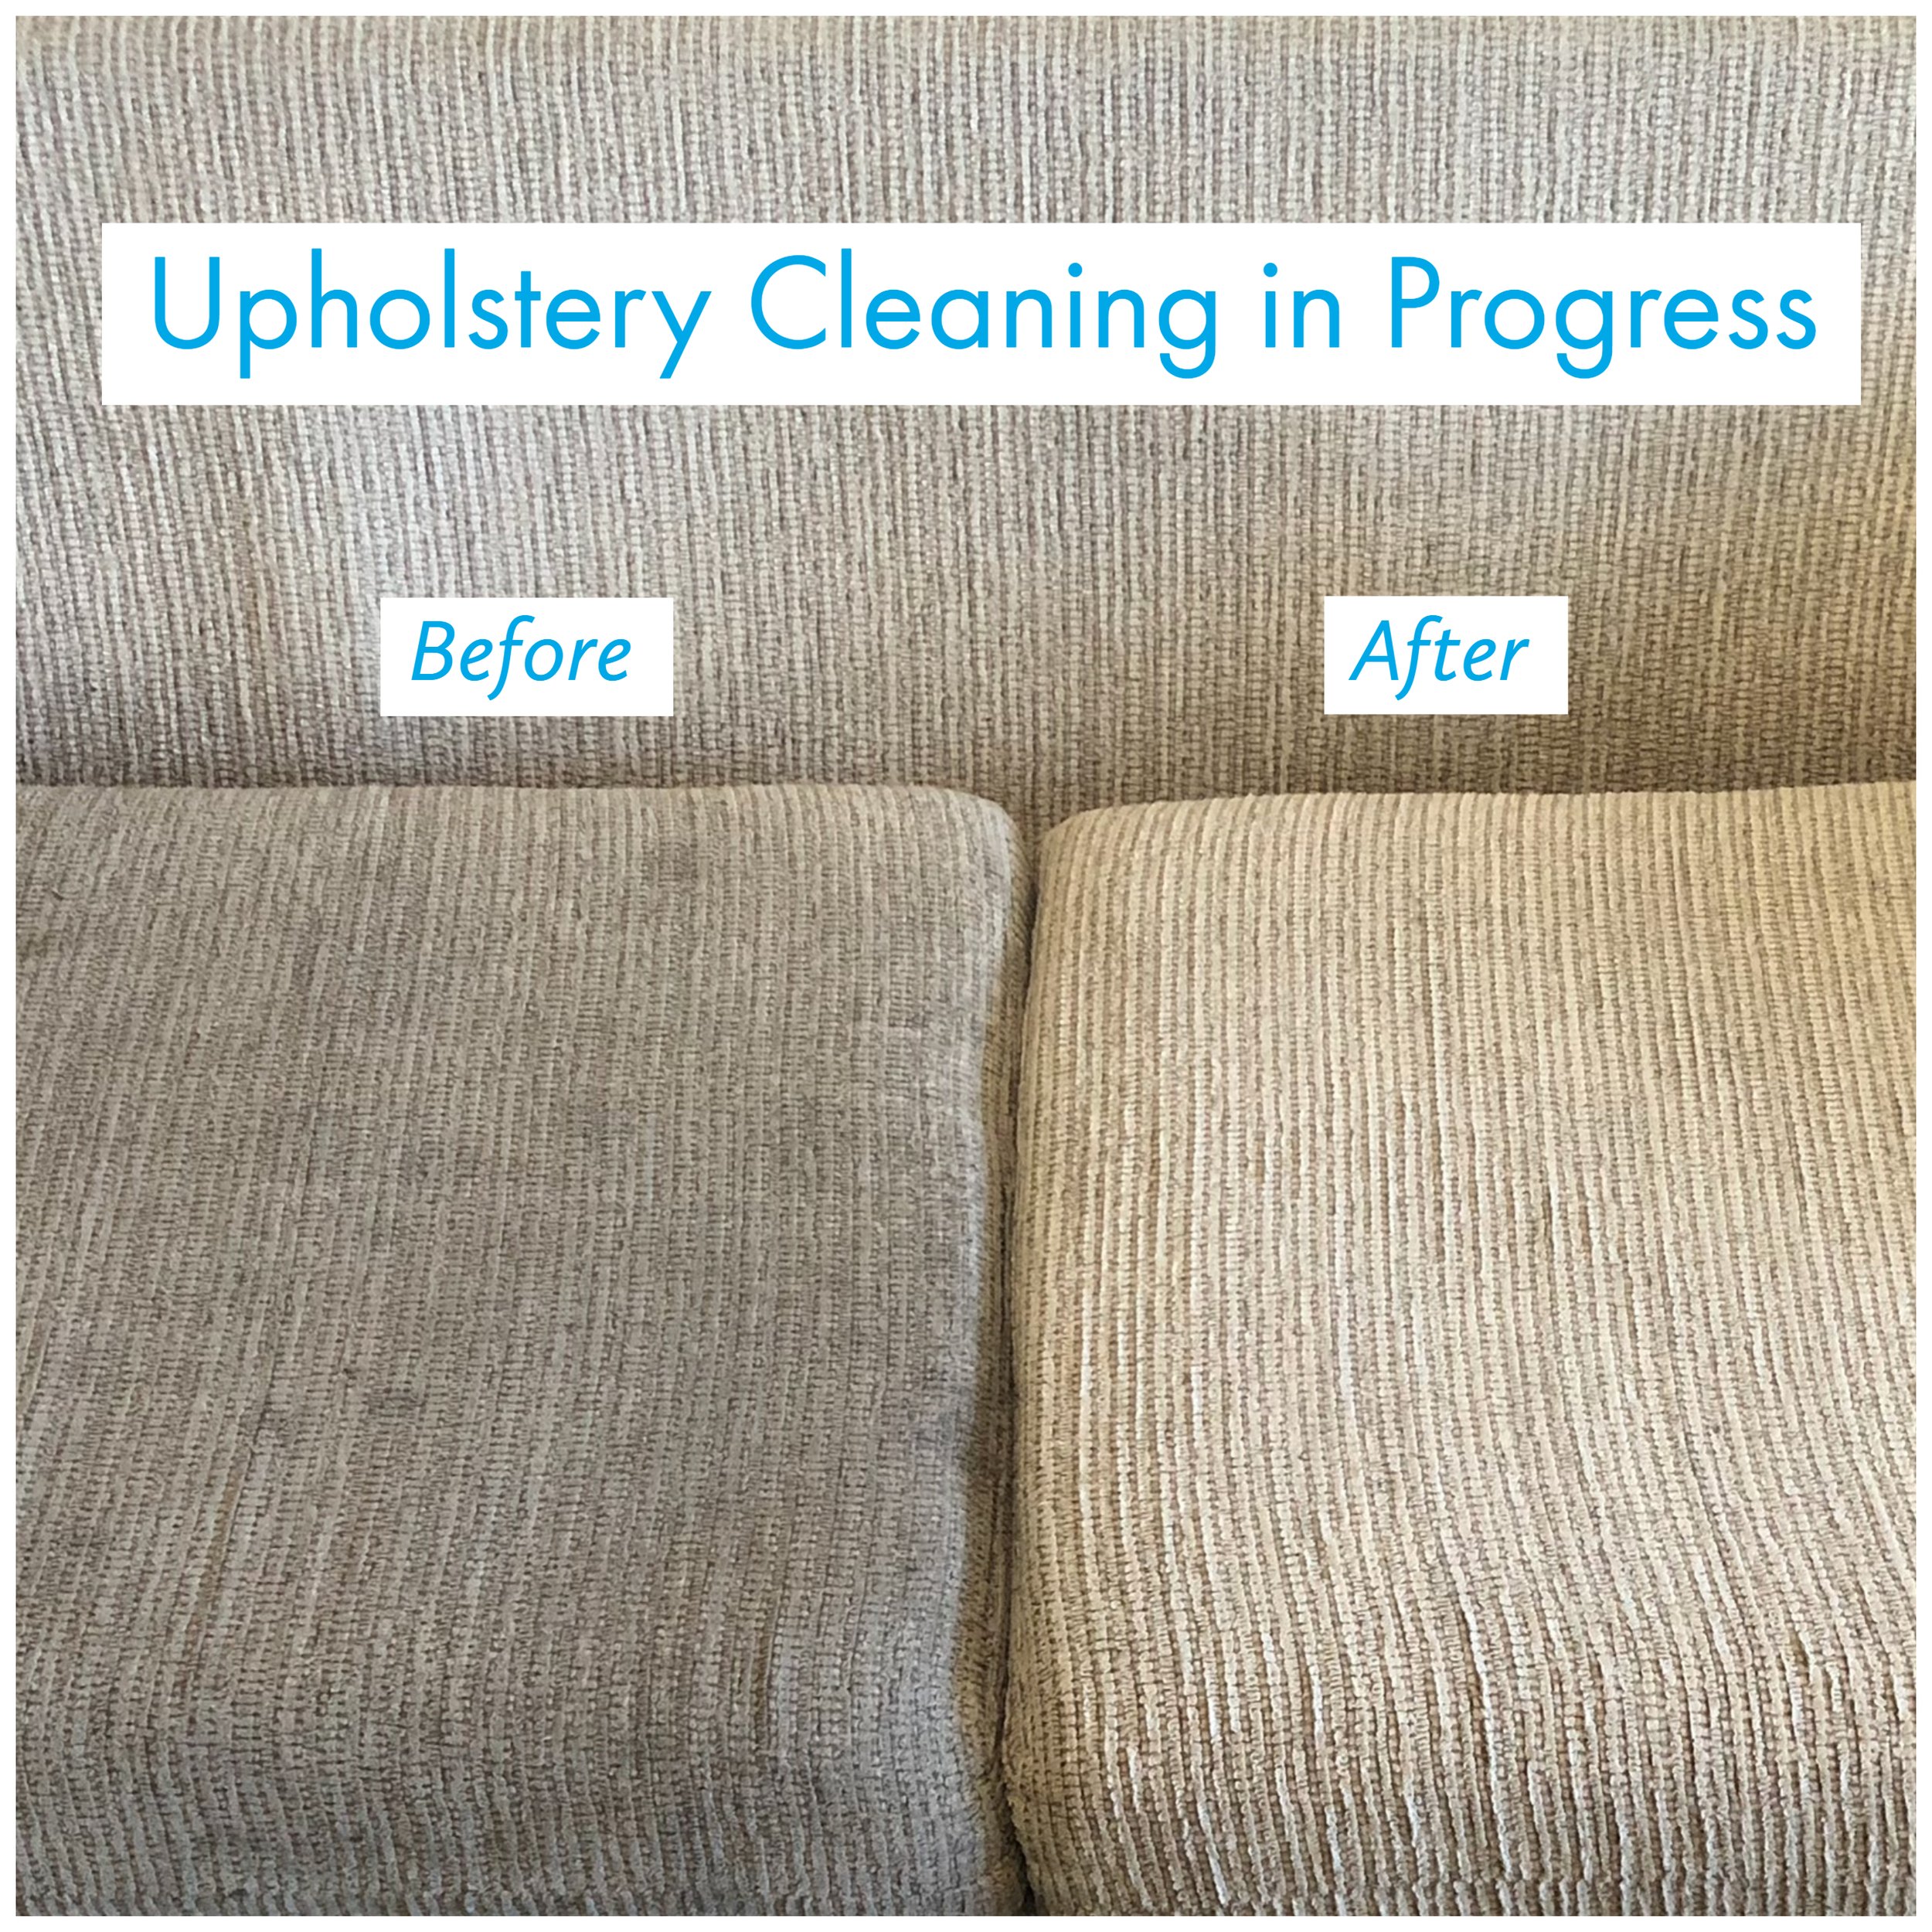 Upholstery Cleaning in Progress.jpg